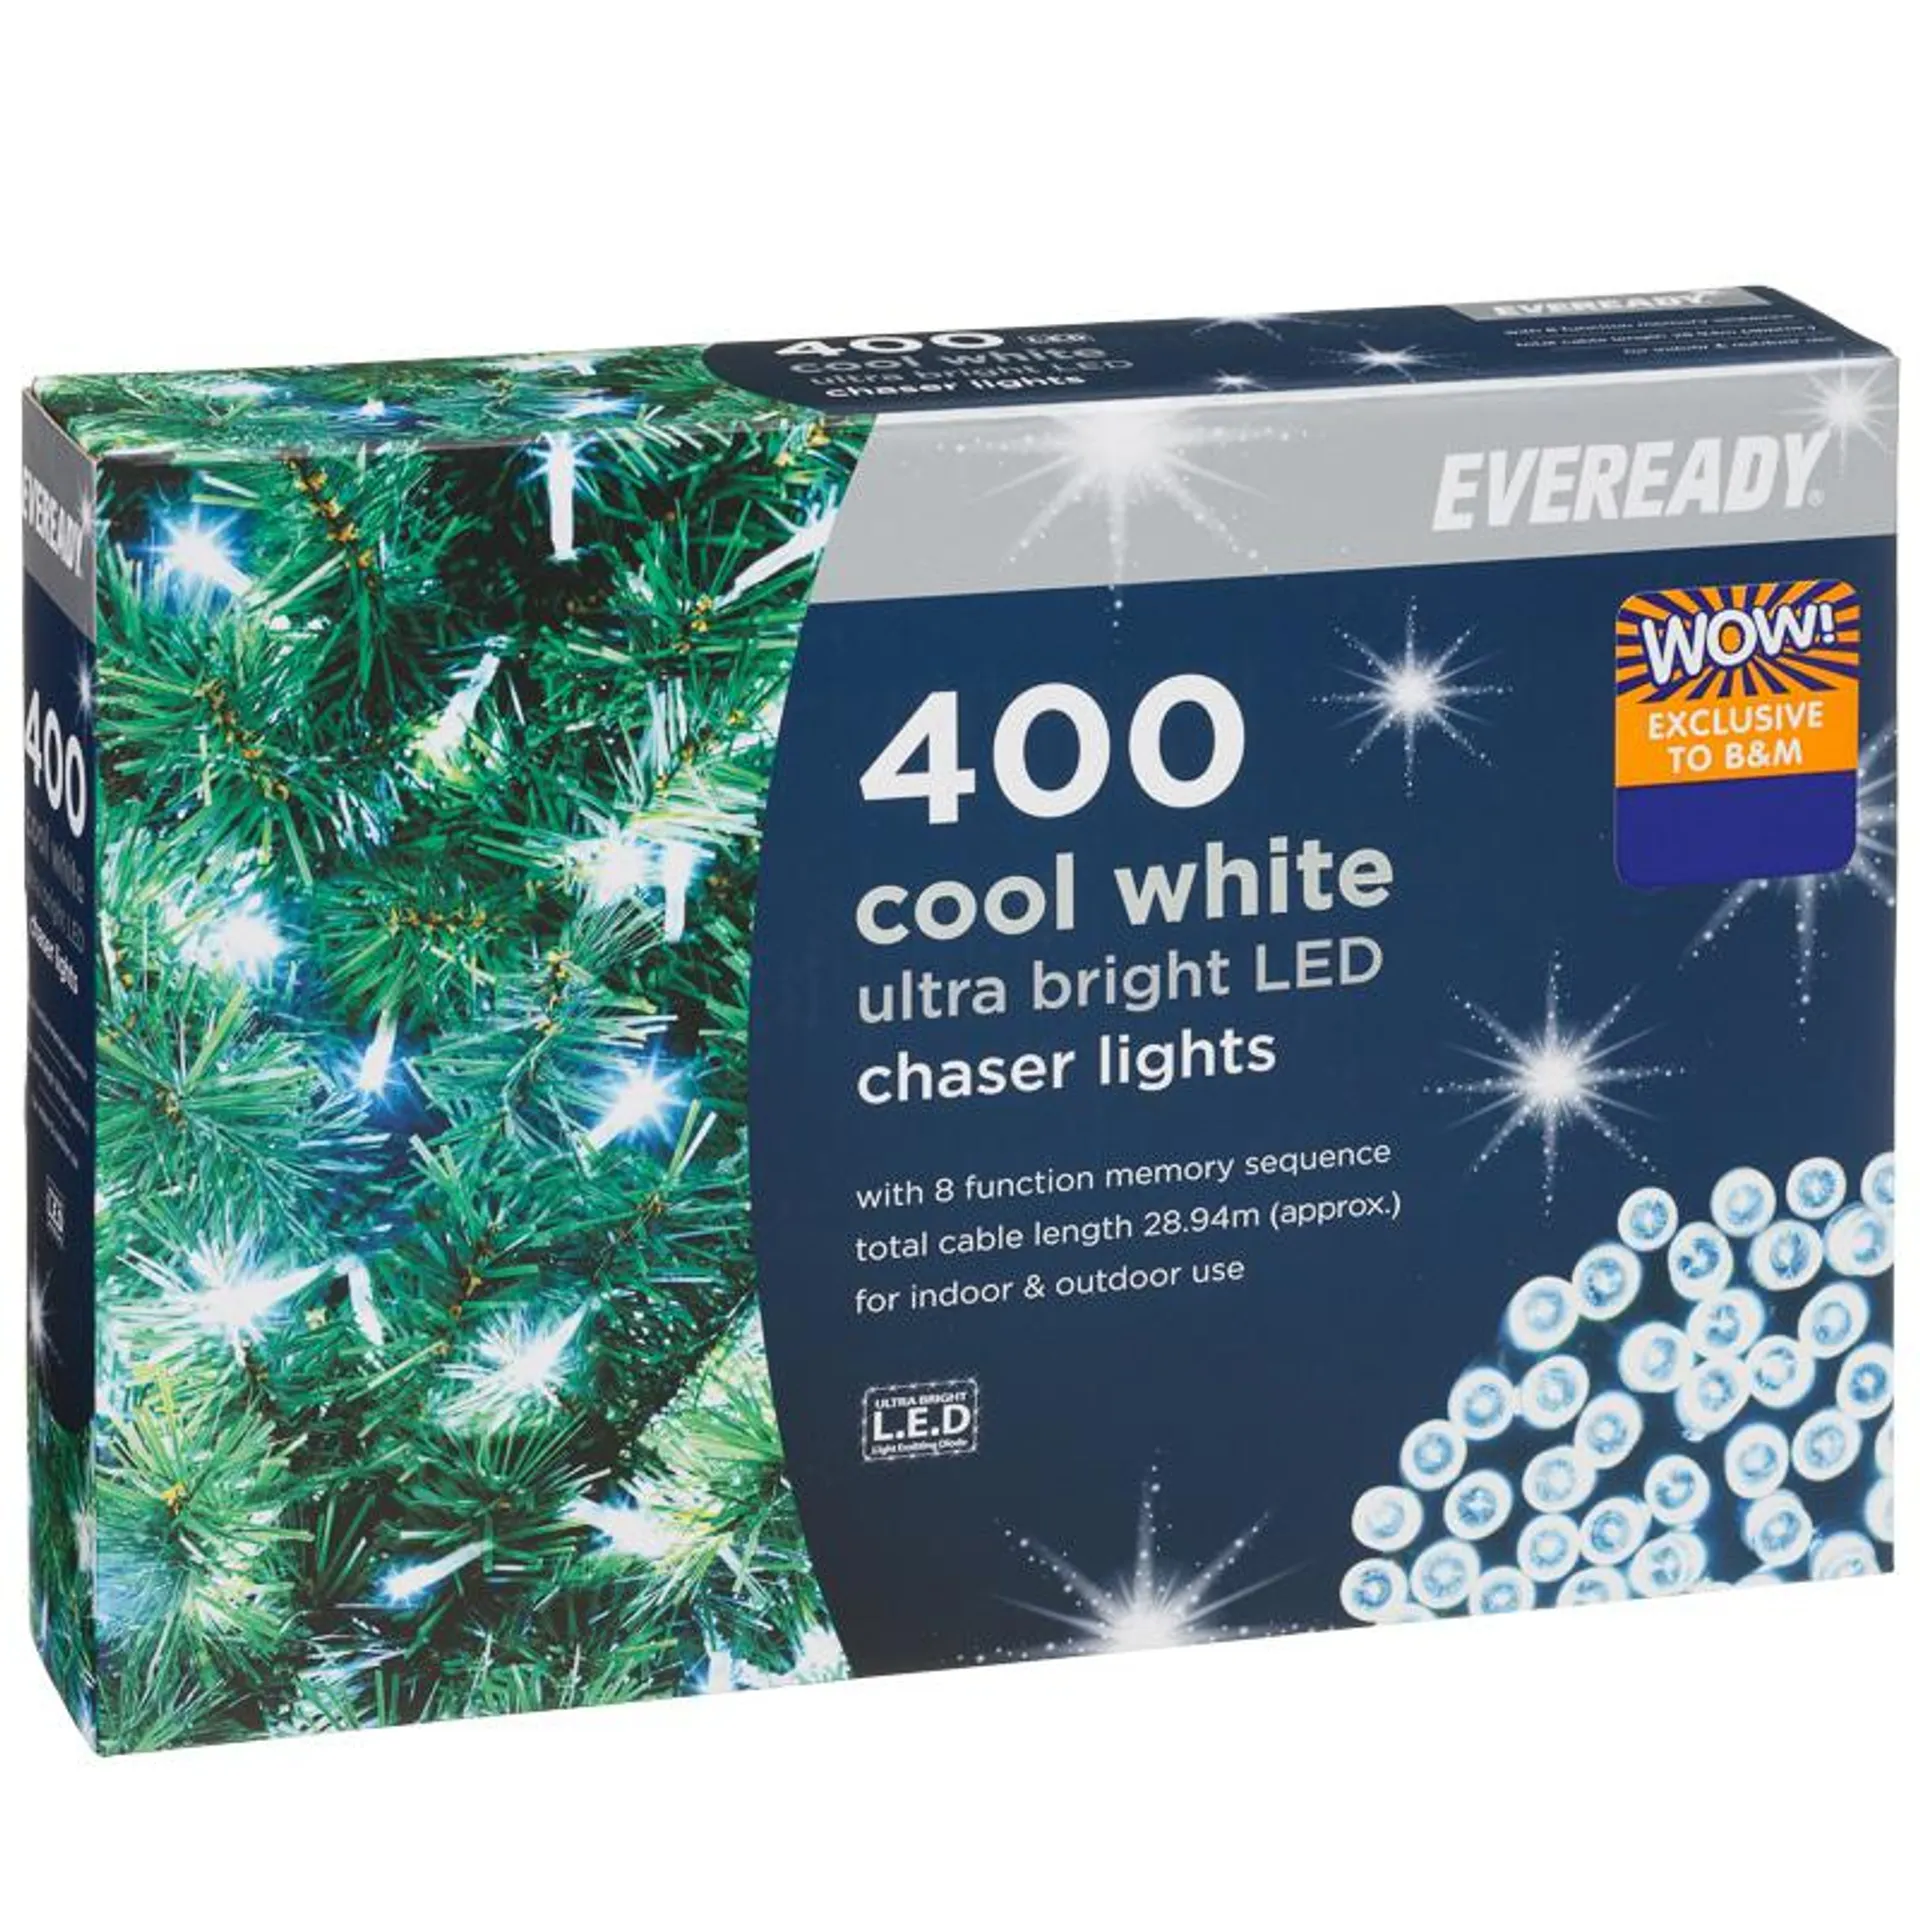 Eveready Ultra Bright LED Chaser Lights 400pk - Cool White